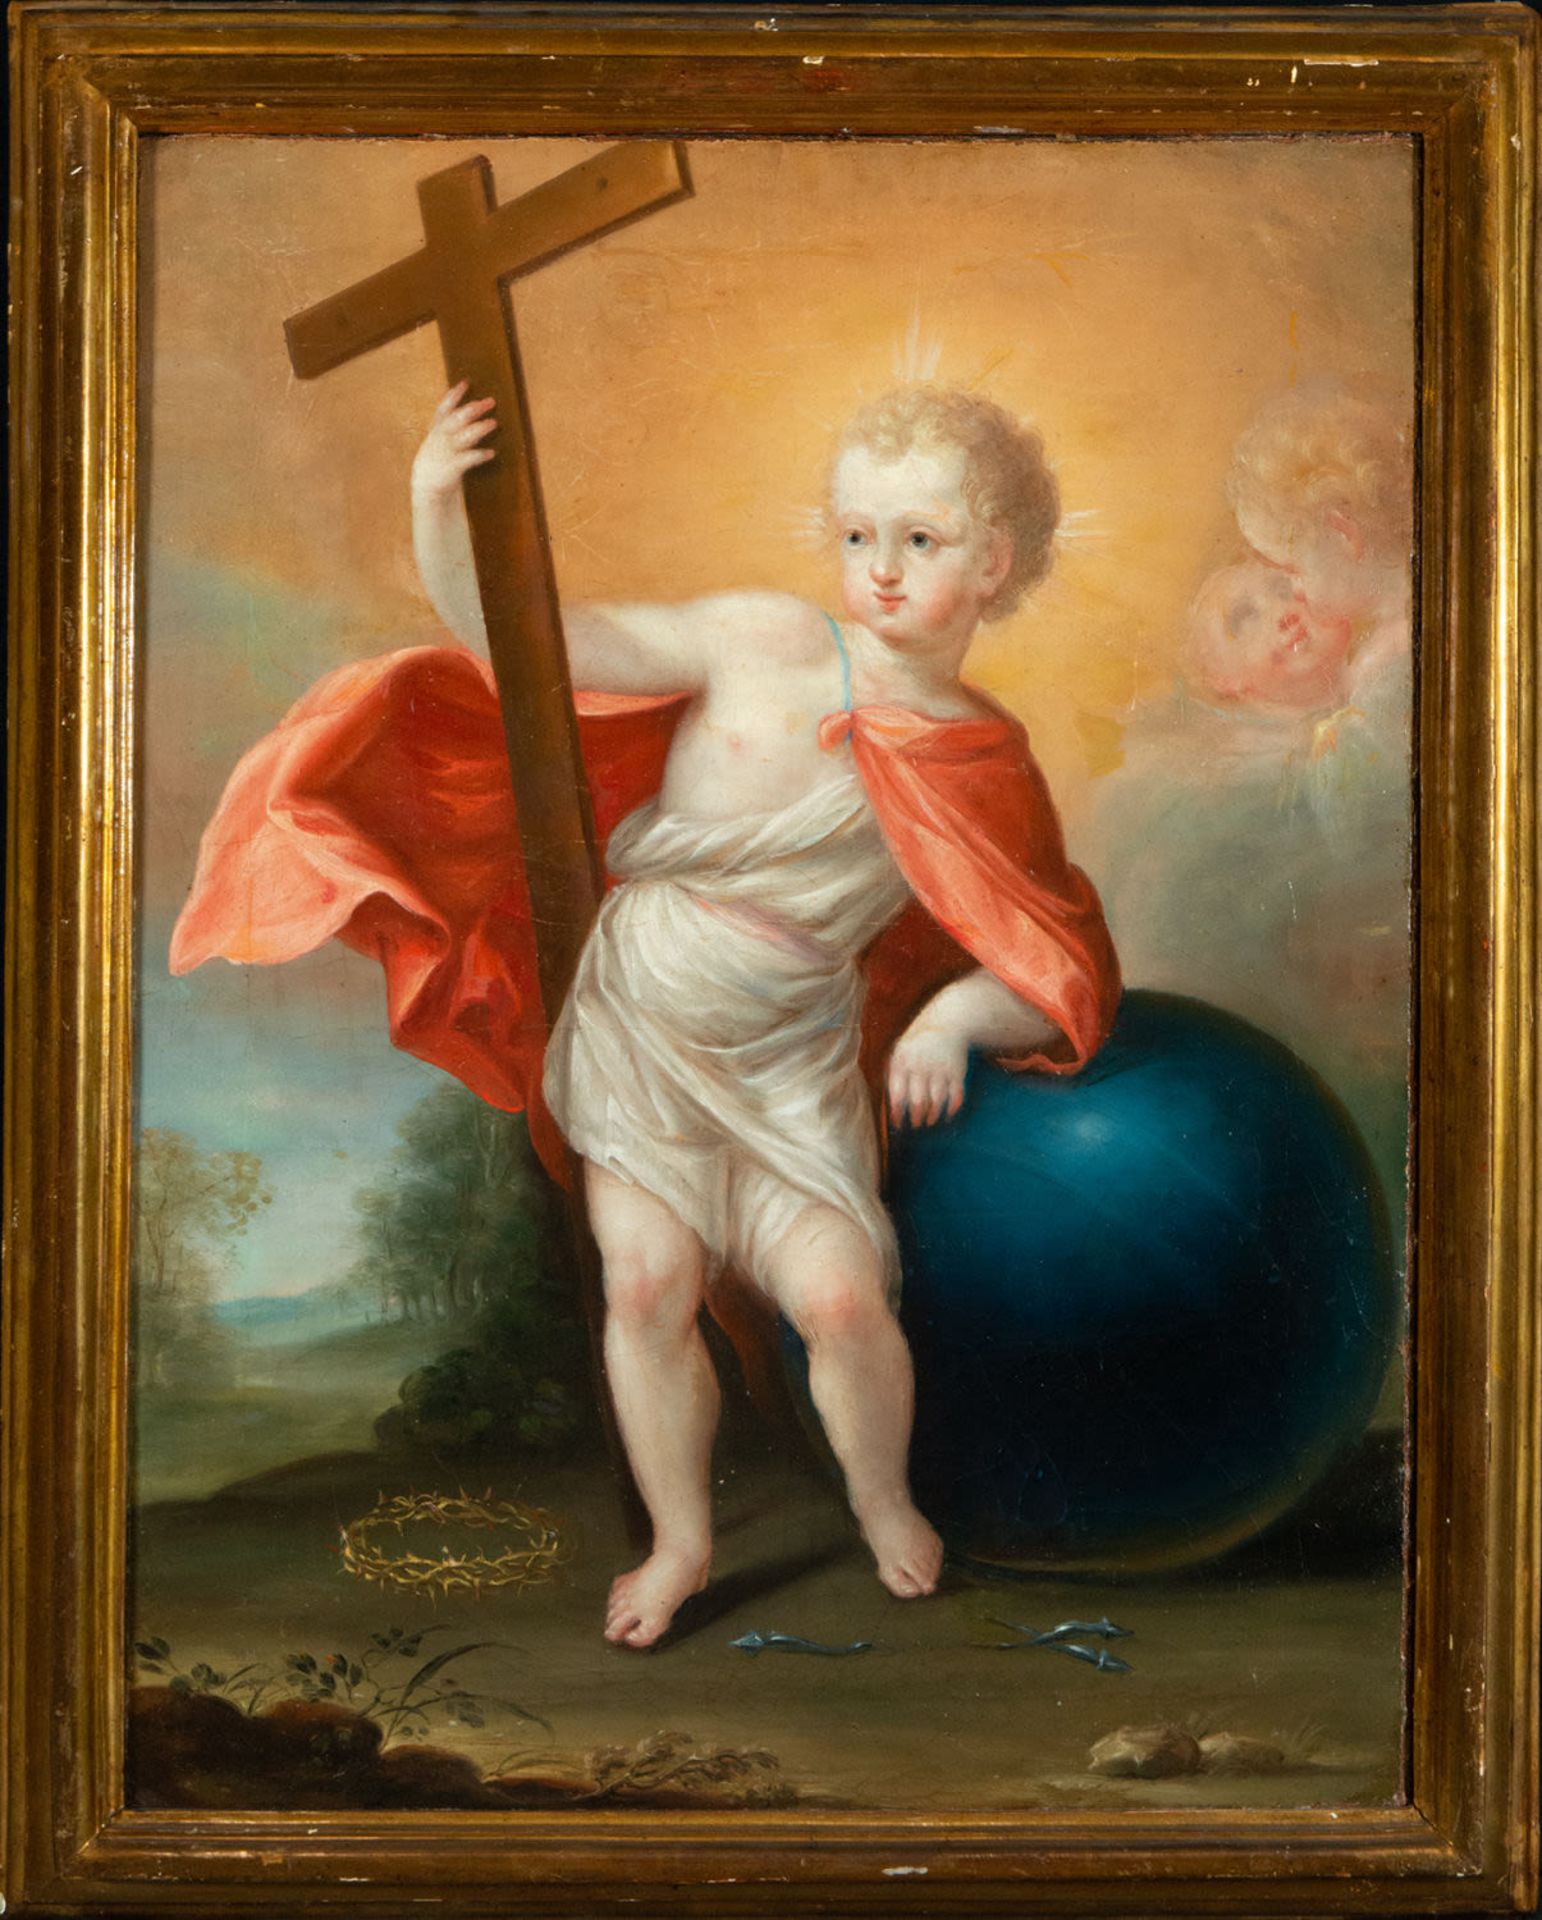 Enfant Jesus with the Cross, 18th century Italian school